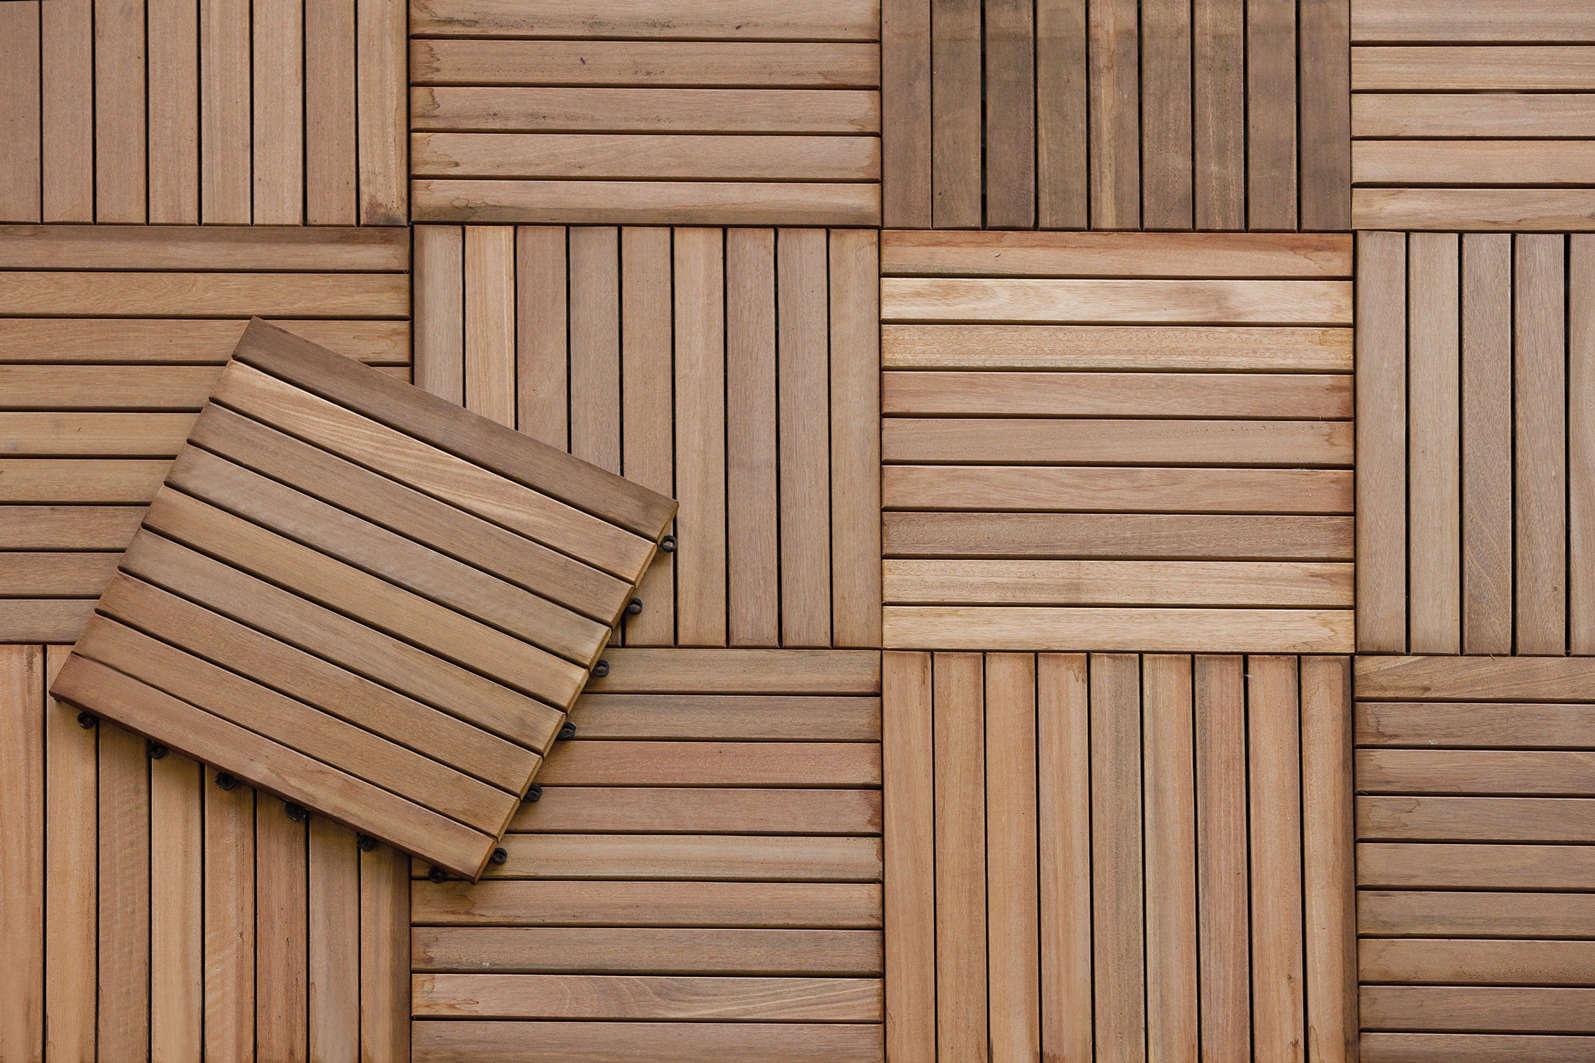 10 Easy Pieces Wood Flooring For Decks, Outdoor Wood Deck Flooring